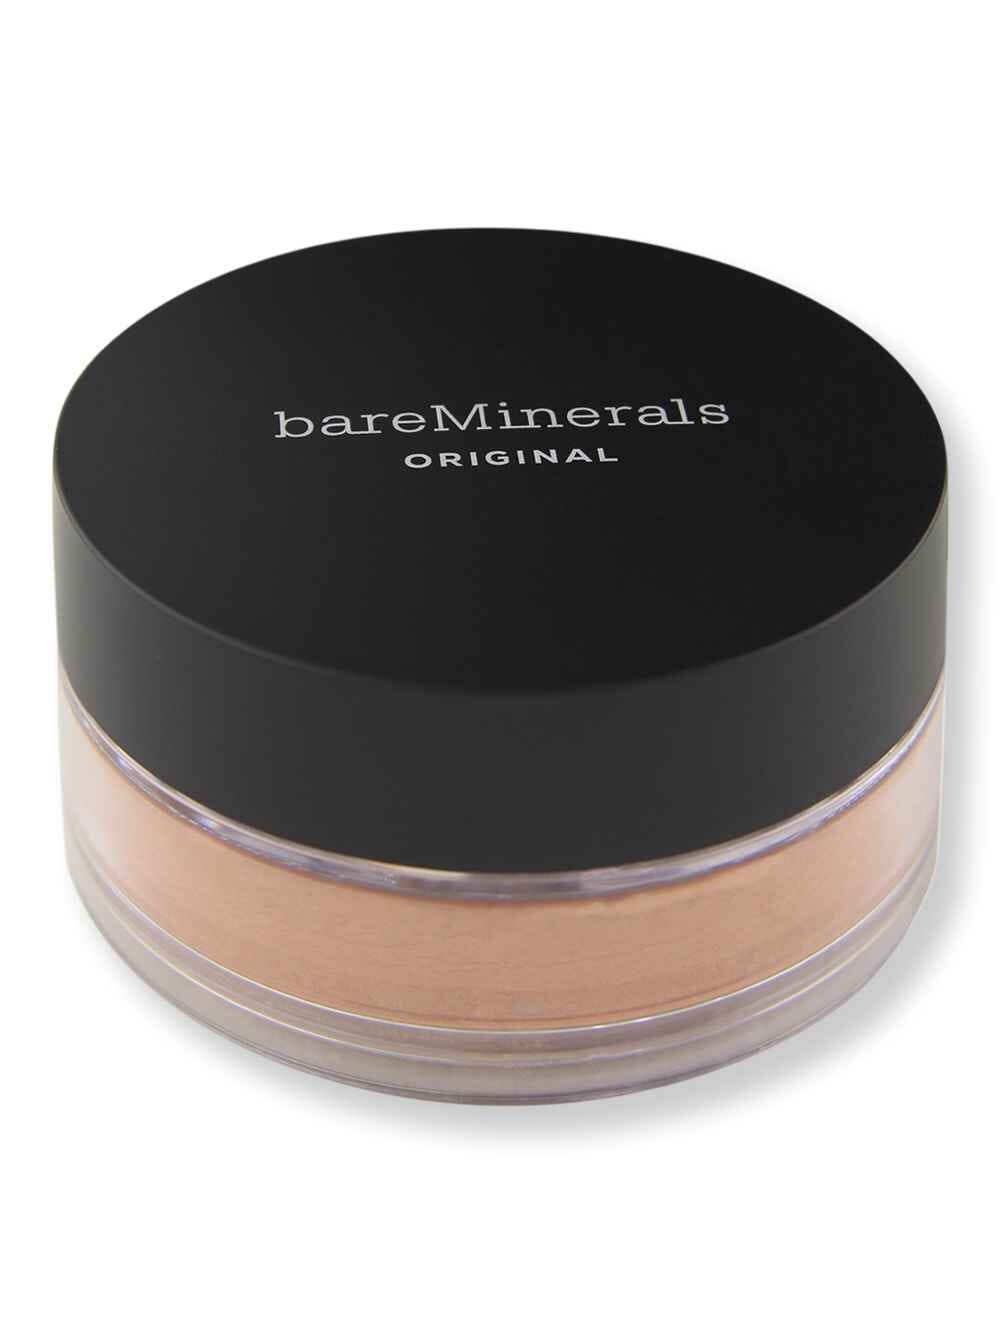 Bareminerals Bareminerals Original Loose Powder Foundation SPF 15 Warm Tan 22 0.28 oz8 g Tinted Moisturizers & Foundations 